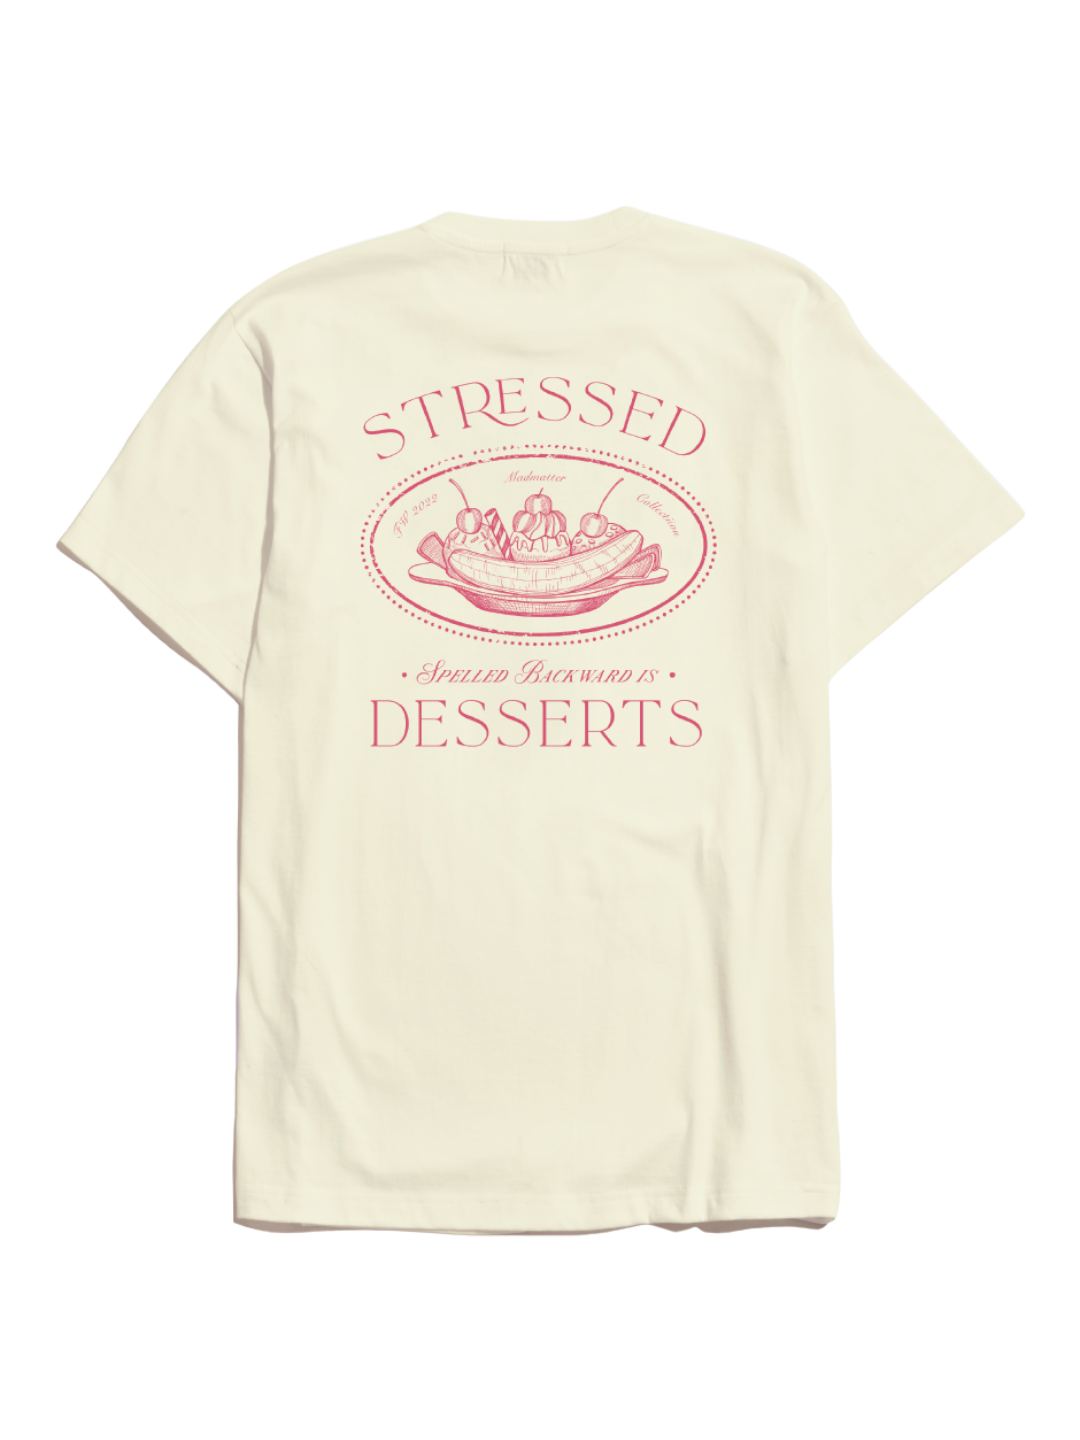 Stressed-Desserts Tee (Custard)